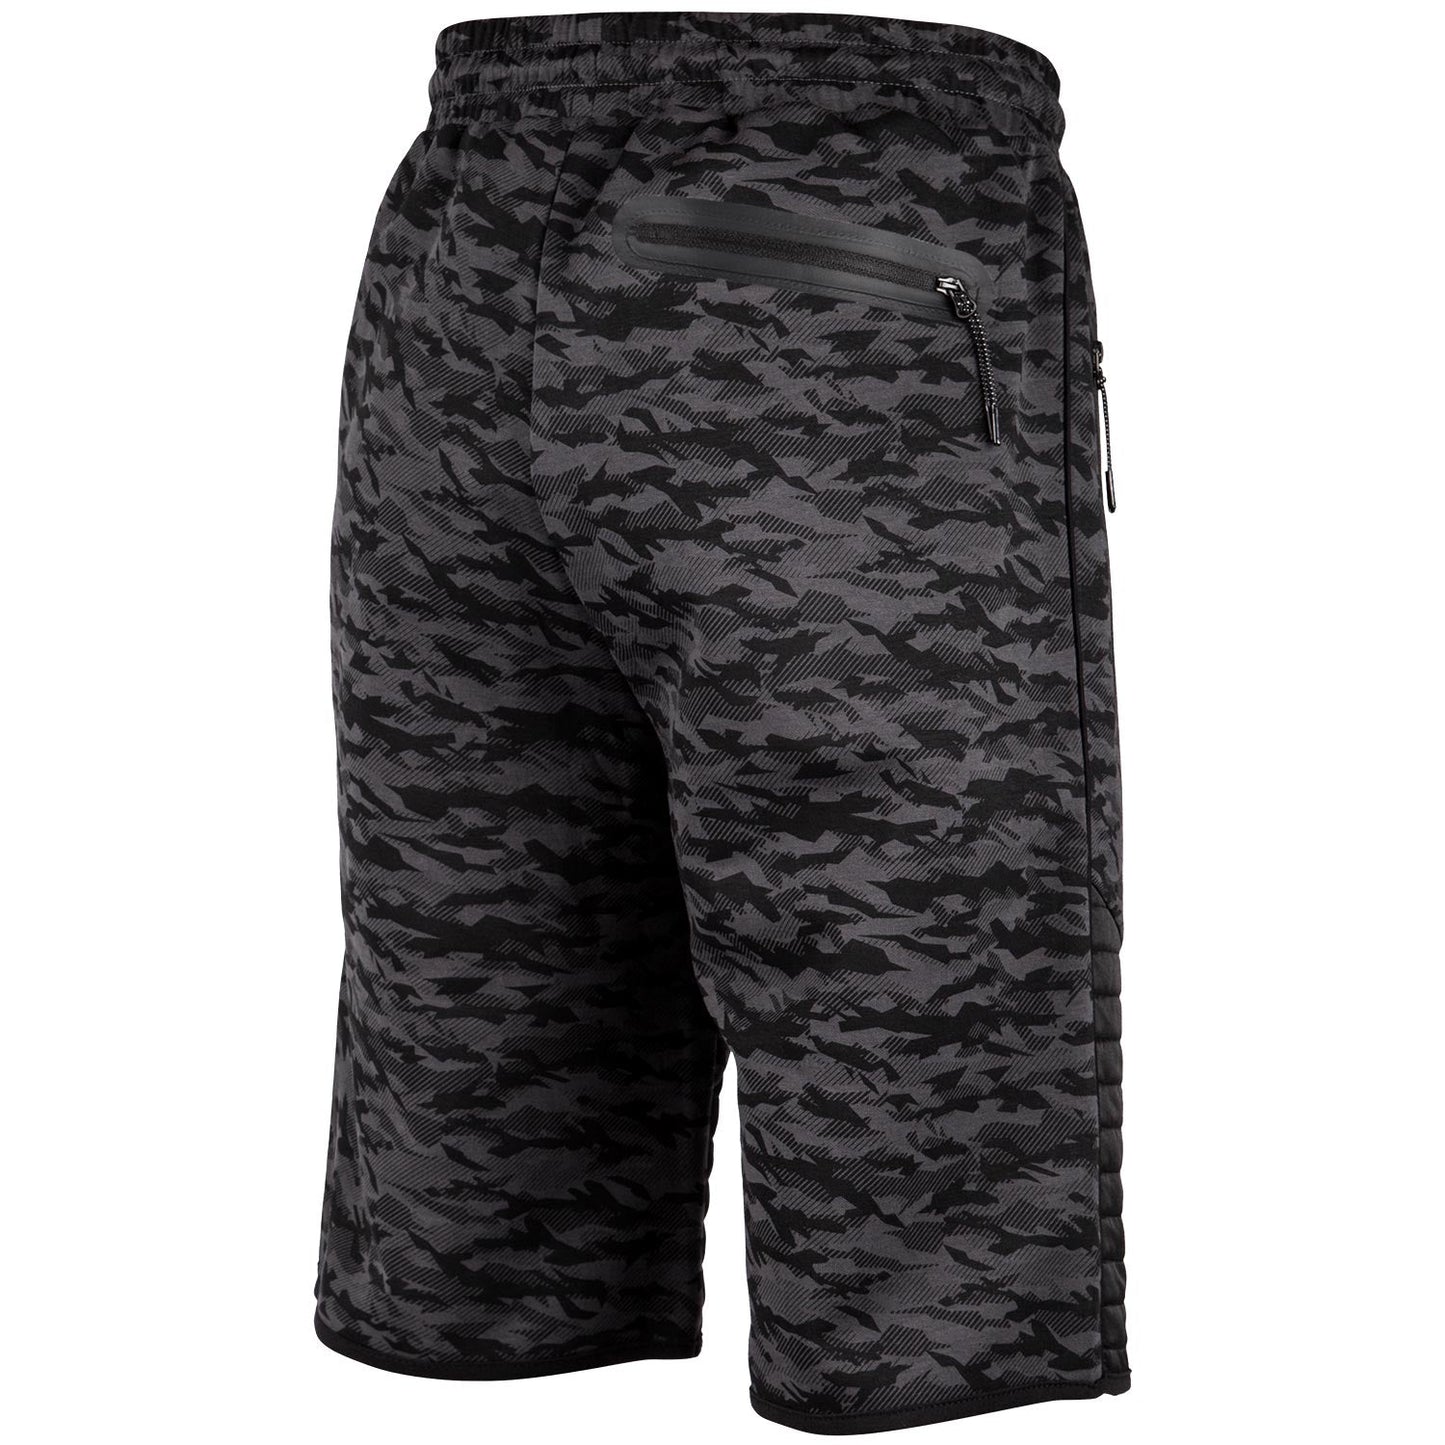 Venum Laser Cotton Shorts - Dark camo